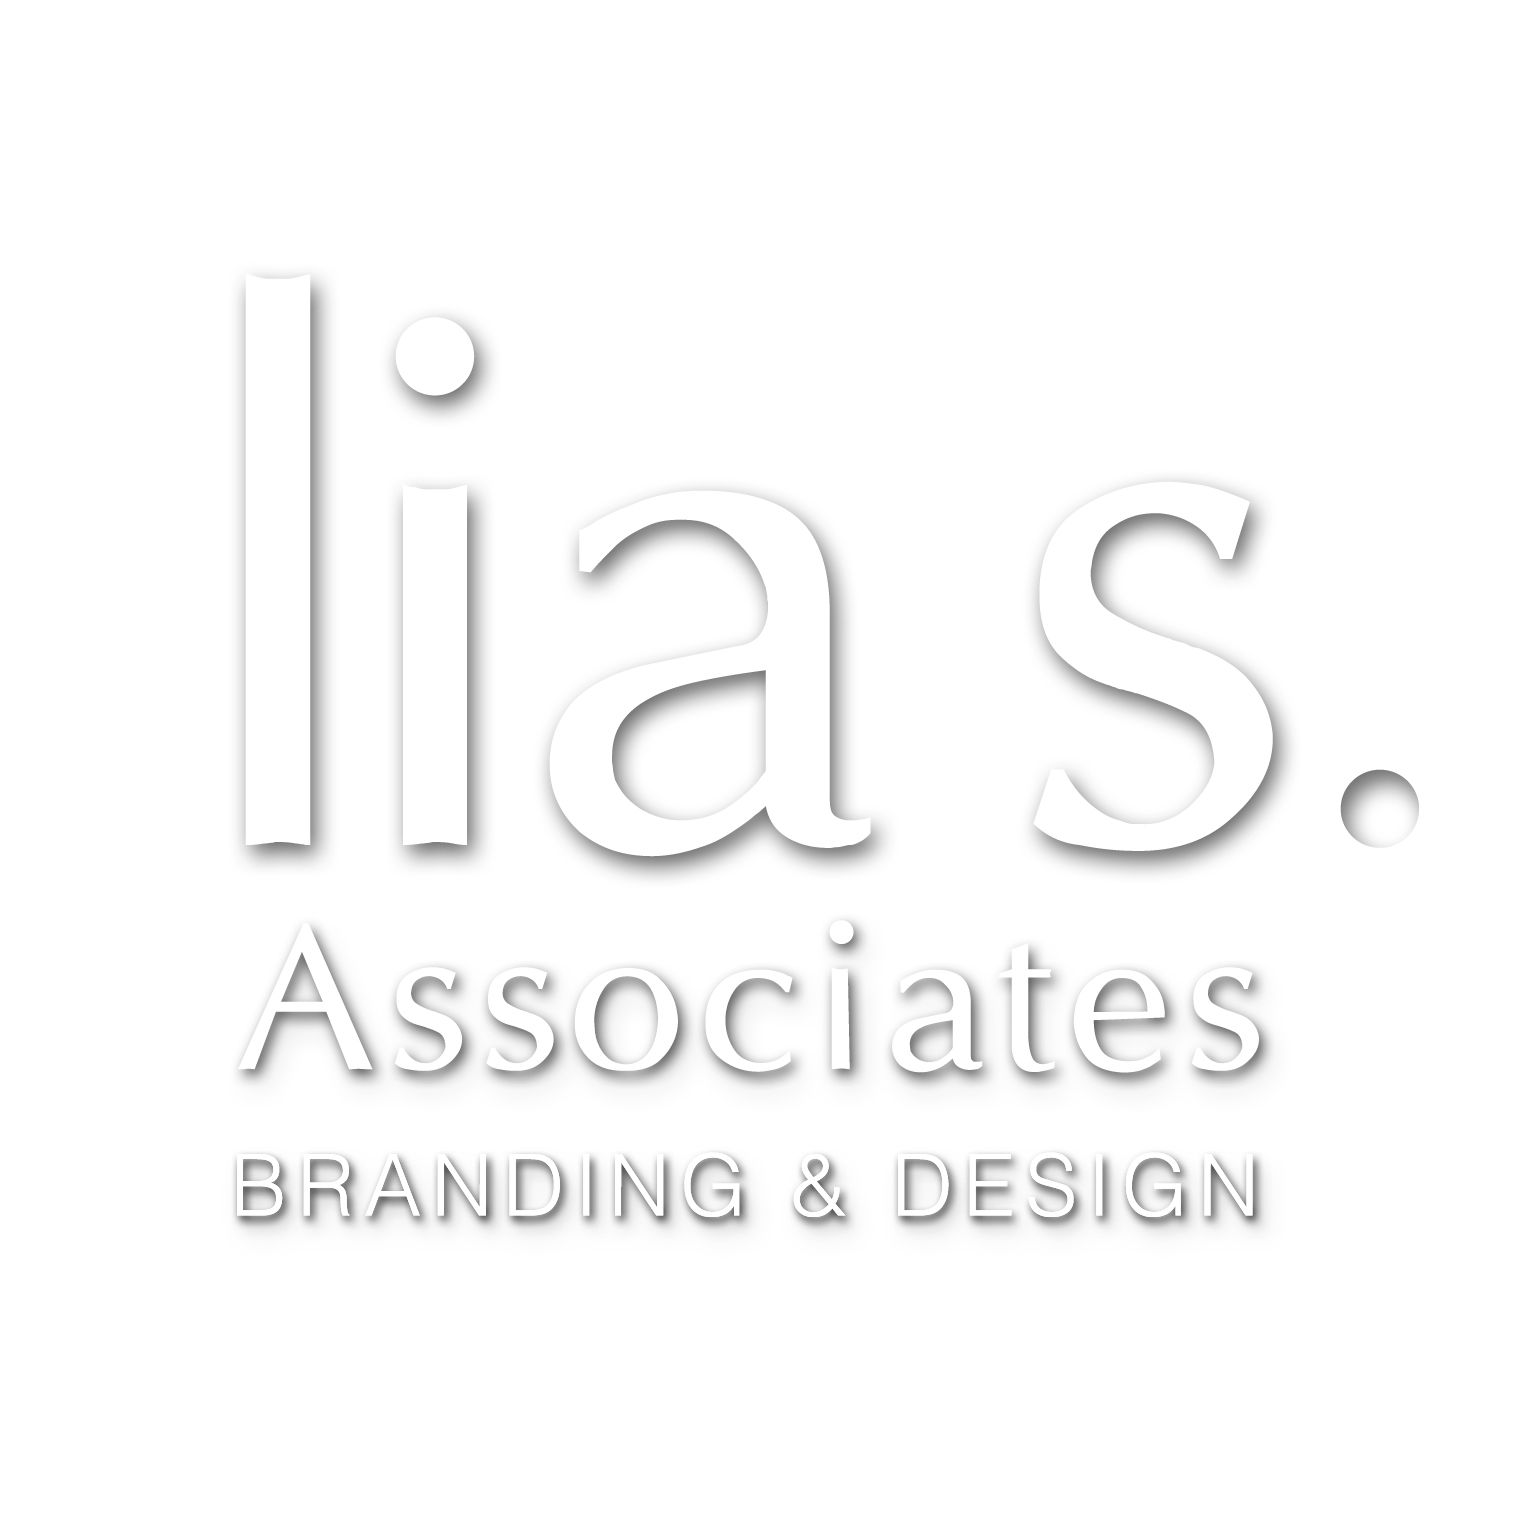 lia s. Associates Branding & Design